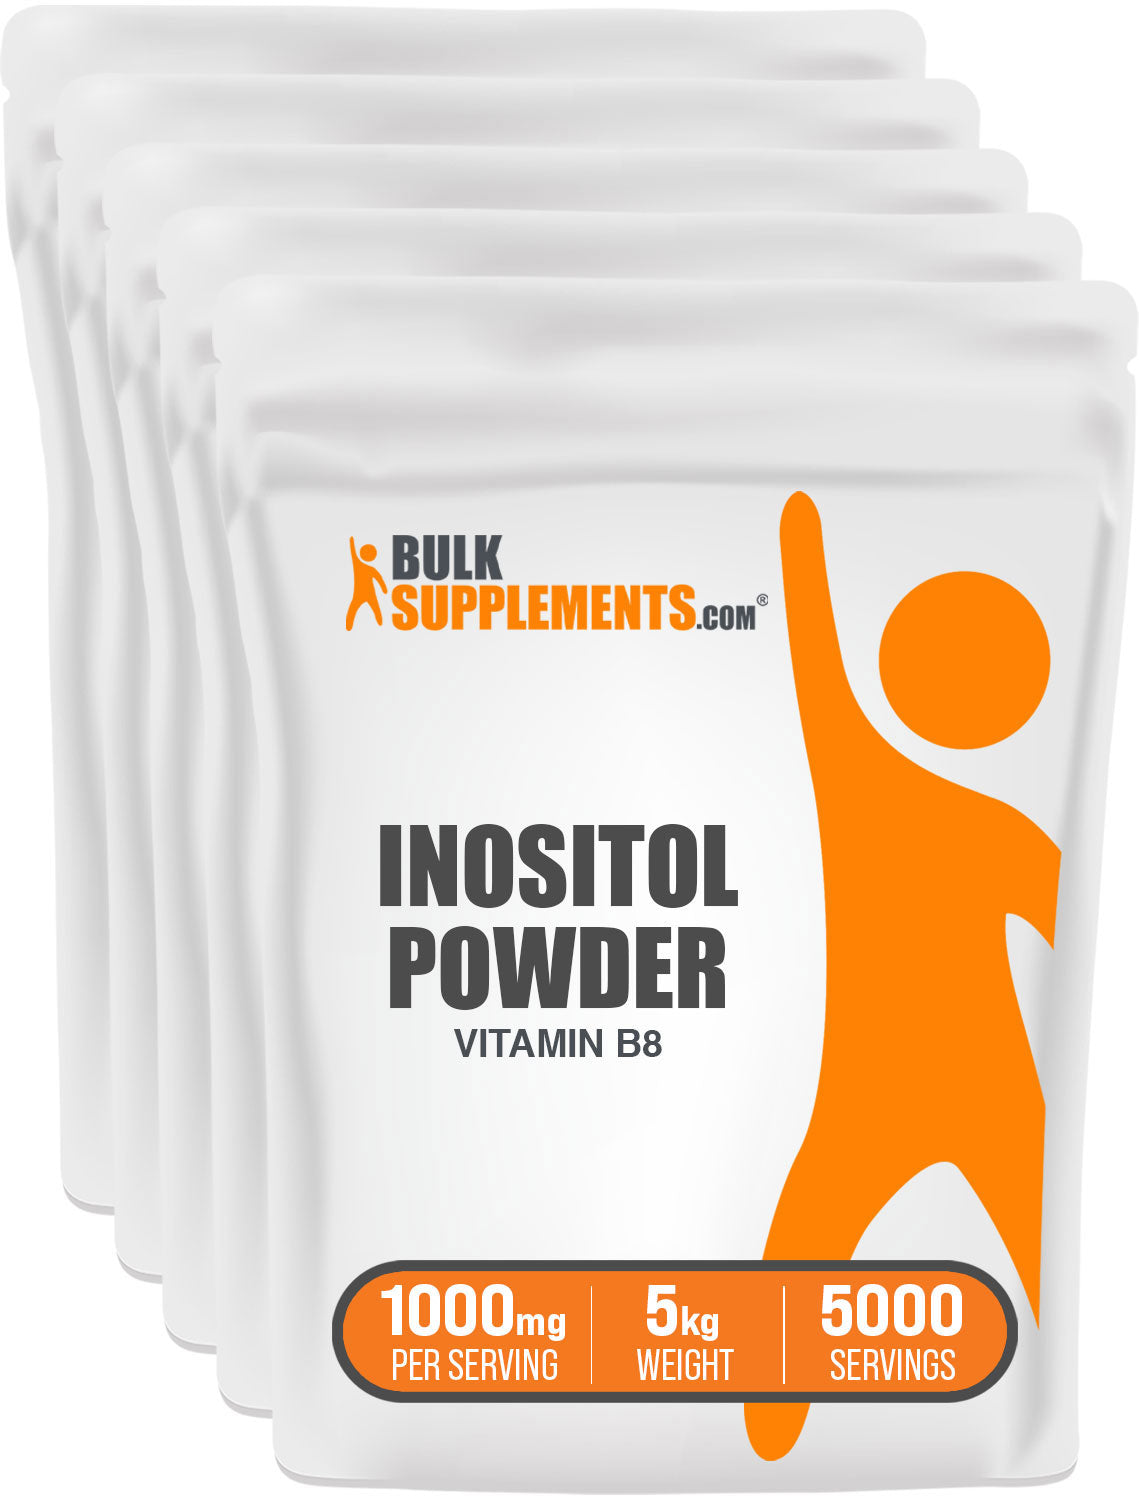 Inositol Vitamin B8 powder 5kg bag